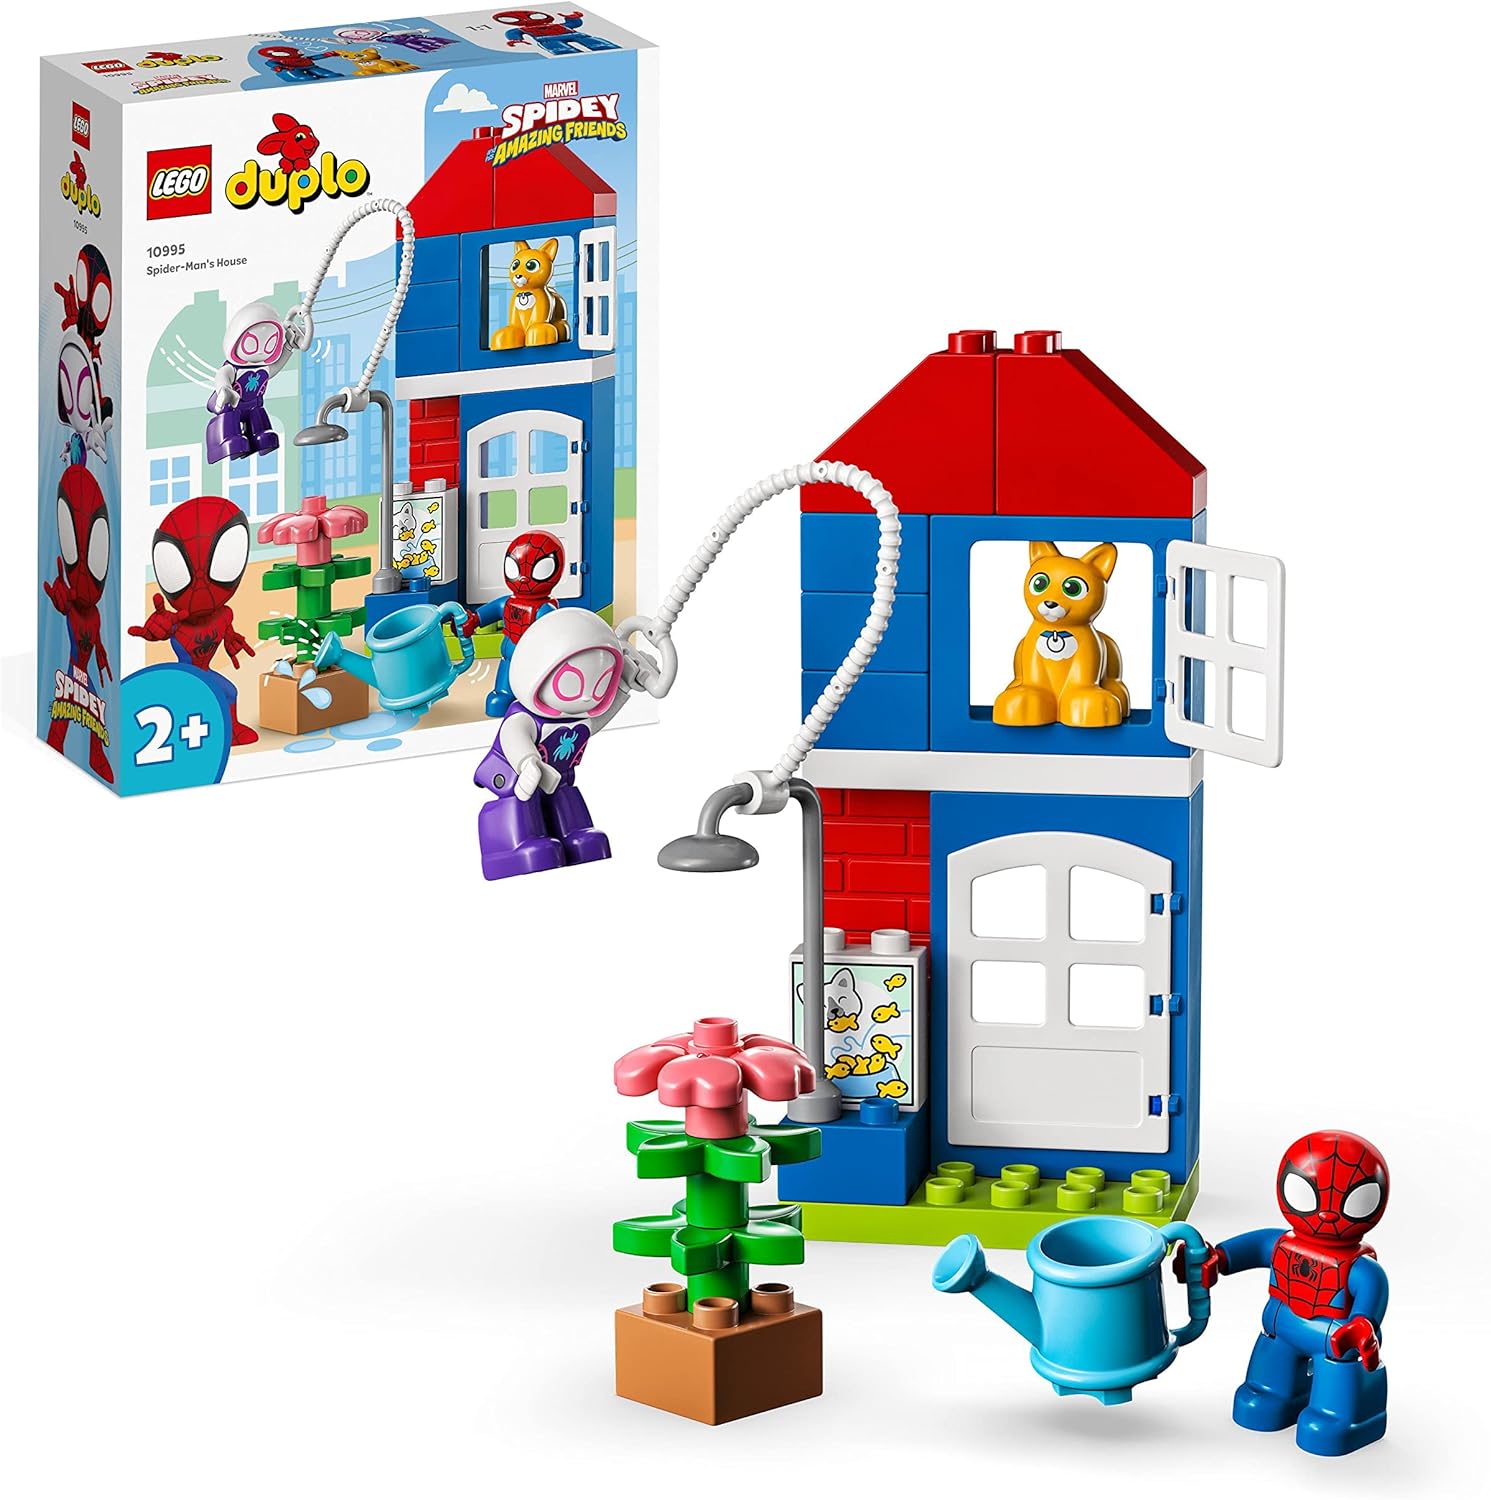 Lego 10995 Spider-Mans House